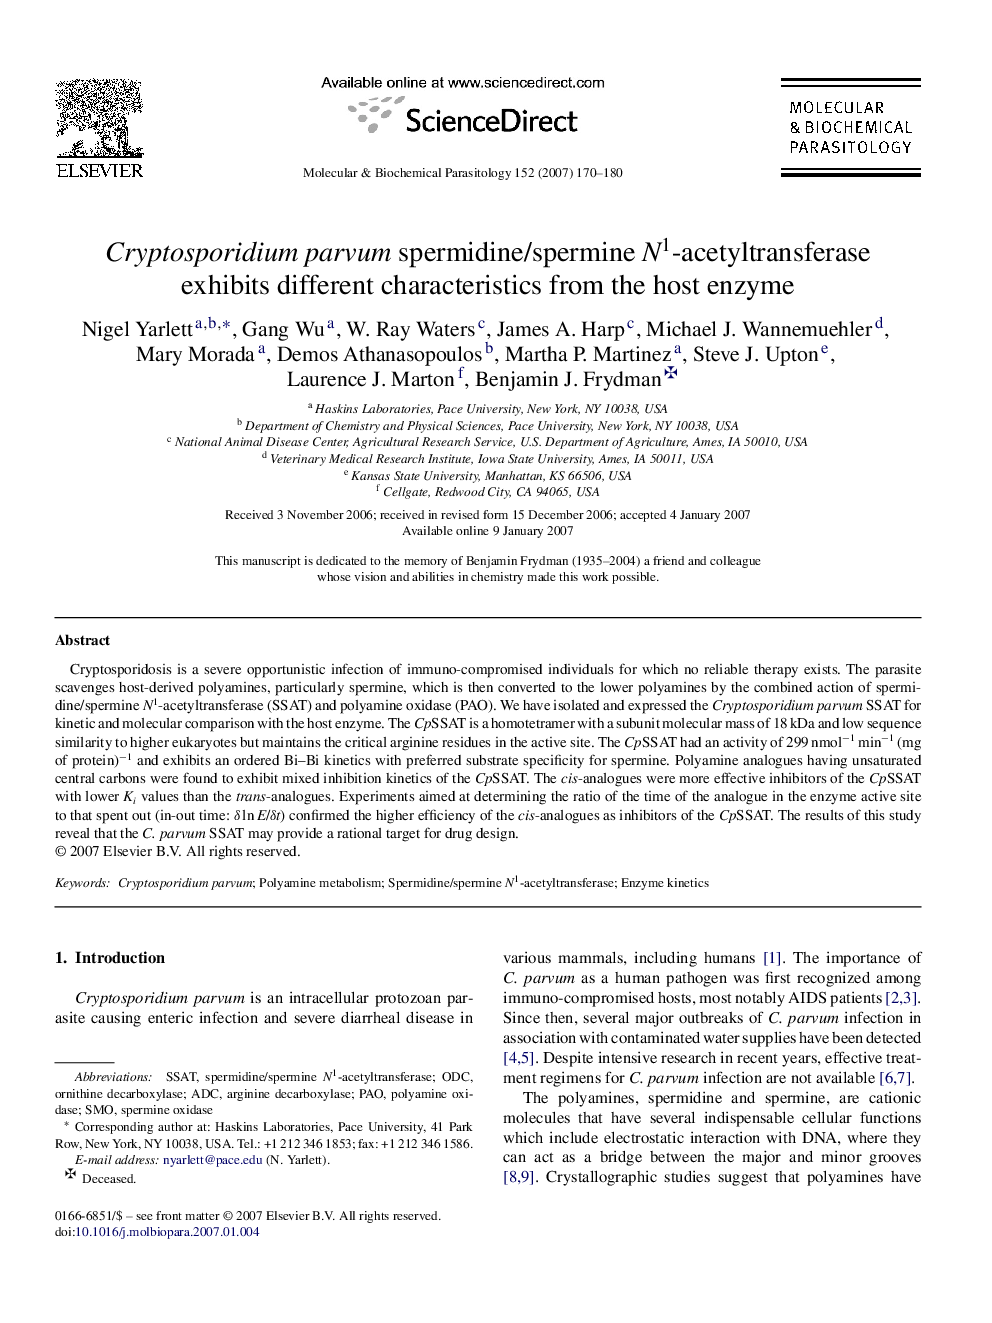 Cryptosporidium parvum spermidine/spermine N1-acetyltransferase exhibits different characteristics from the host enzyme